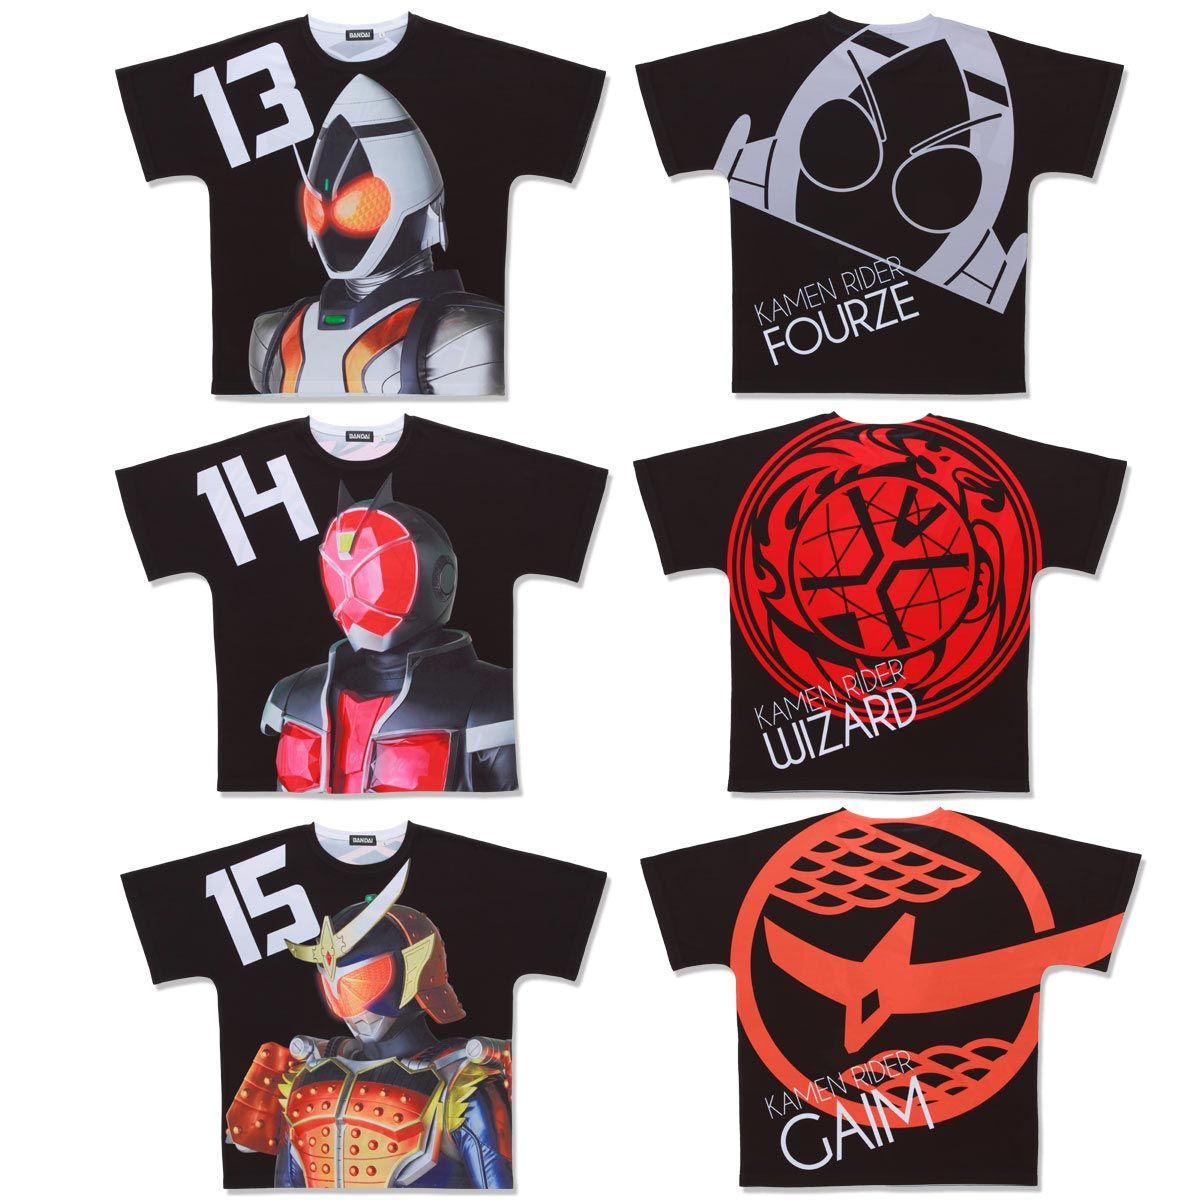 Heisei Kamen Rider 20th Anniversary All-Over Print T-shirt Collection